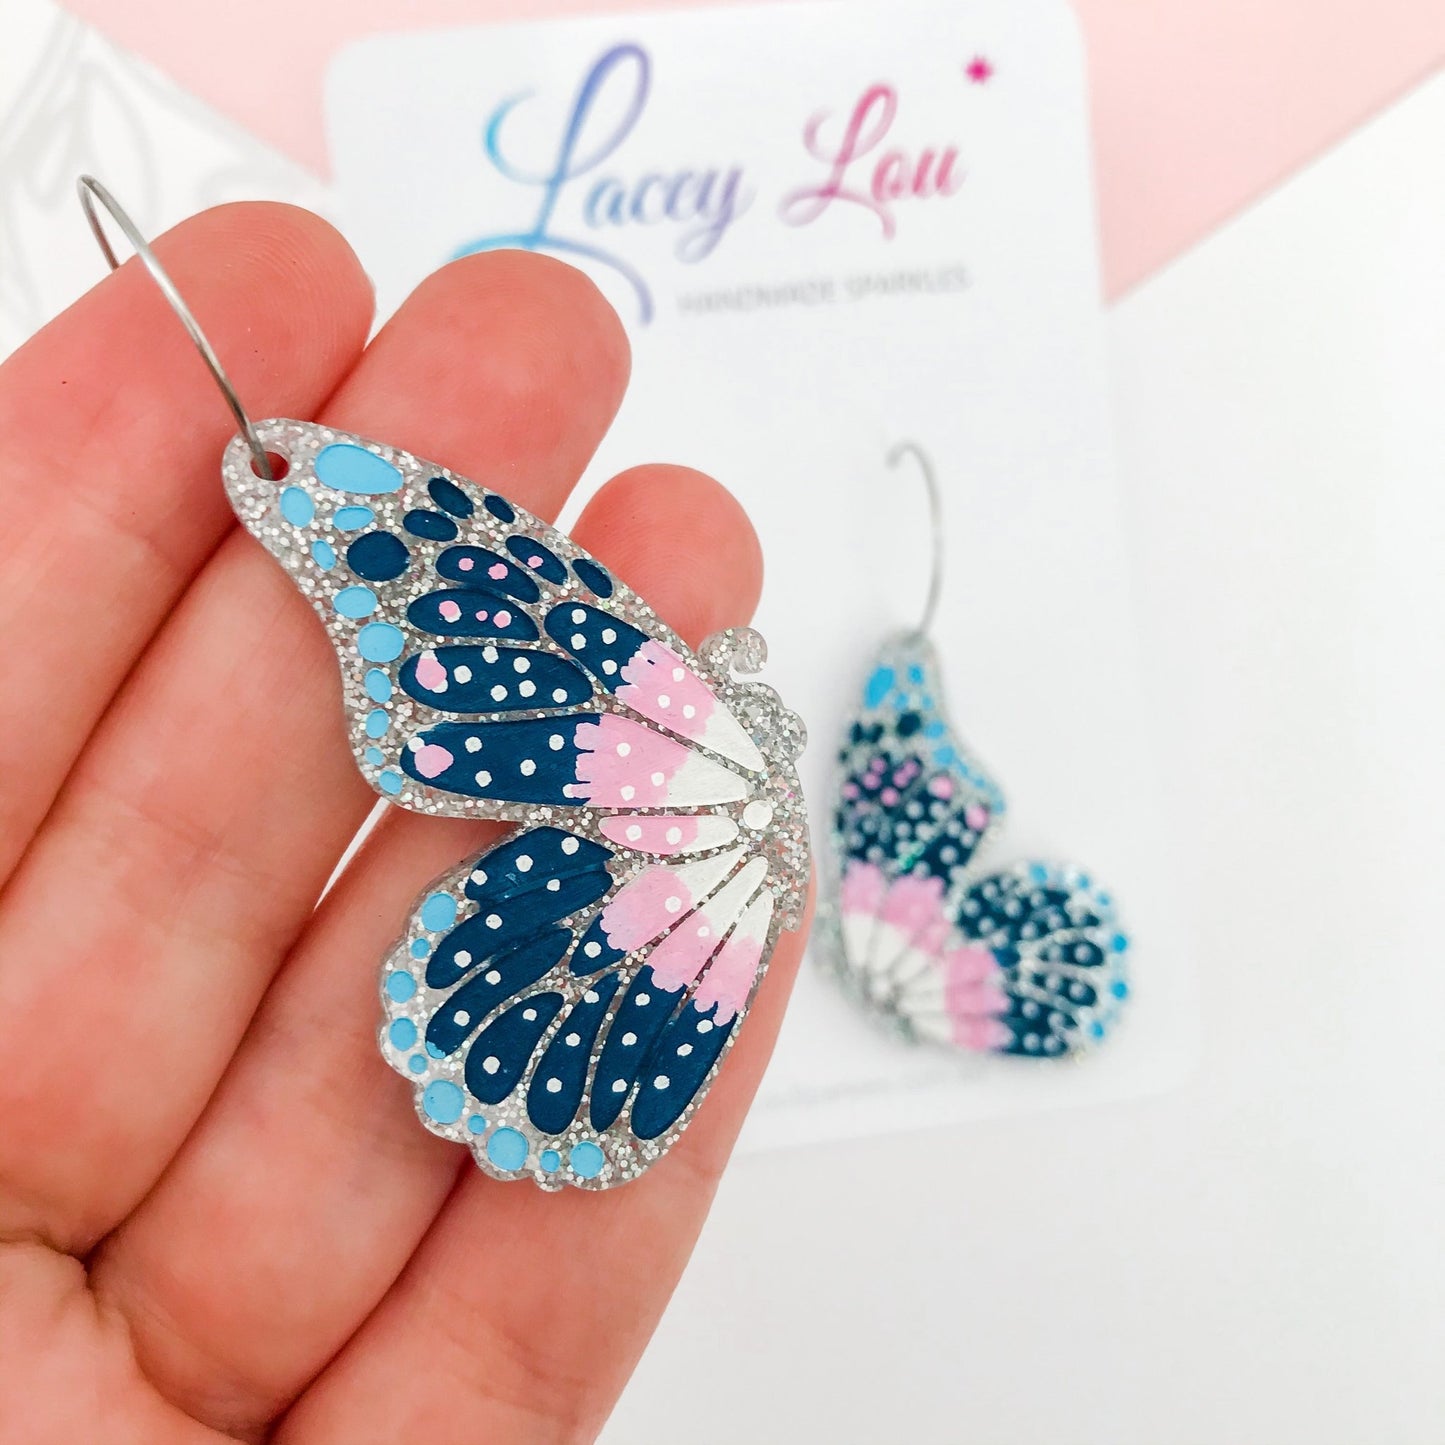 Large Butterfly Hoop Earrings - Silver Glitter Painted Acrylic Earrings - Lacey Lou Sparkles